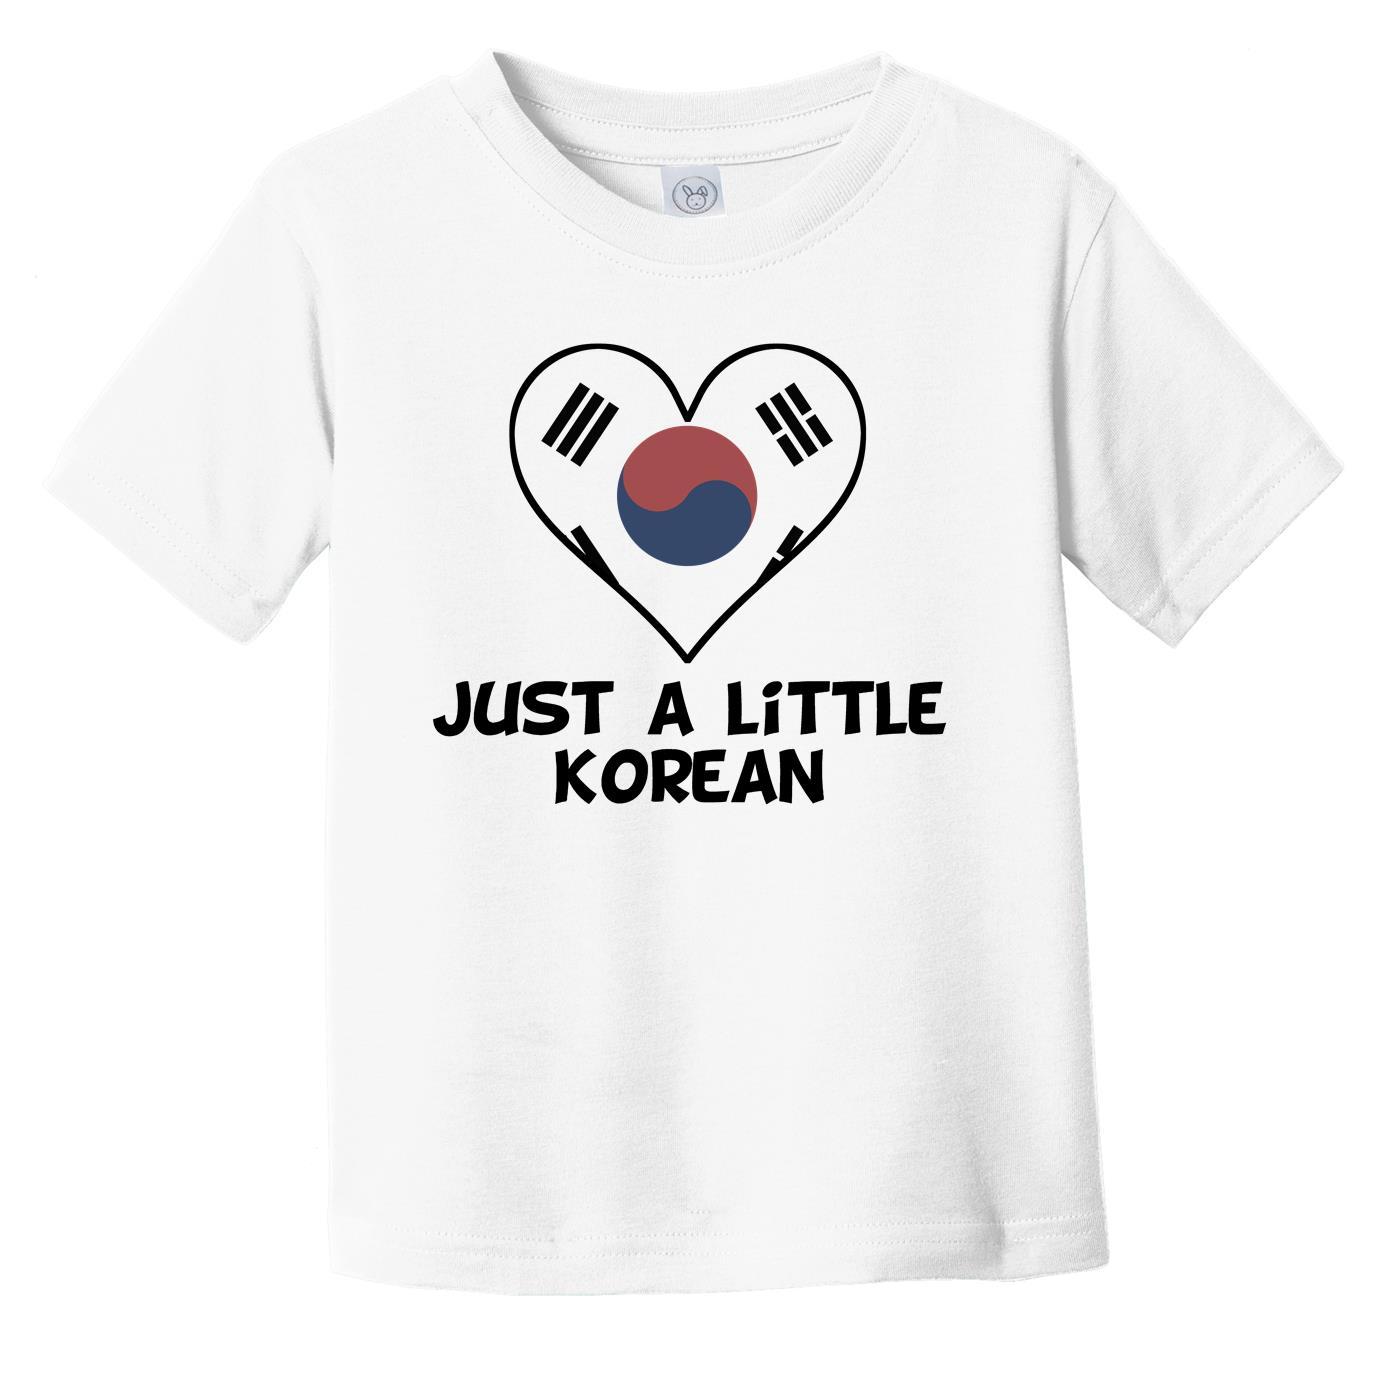 Just A Little Korean T-Shirt - Funny South Korea Flag Infant Toddler Shirt